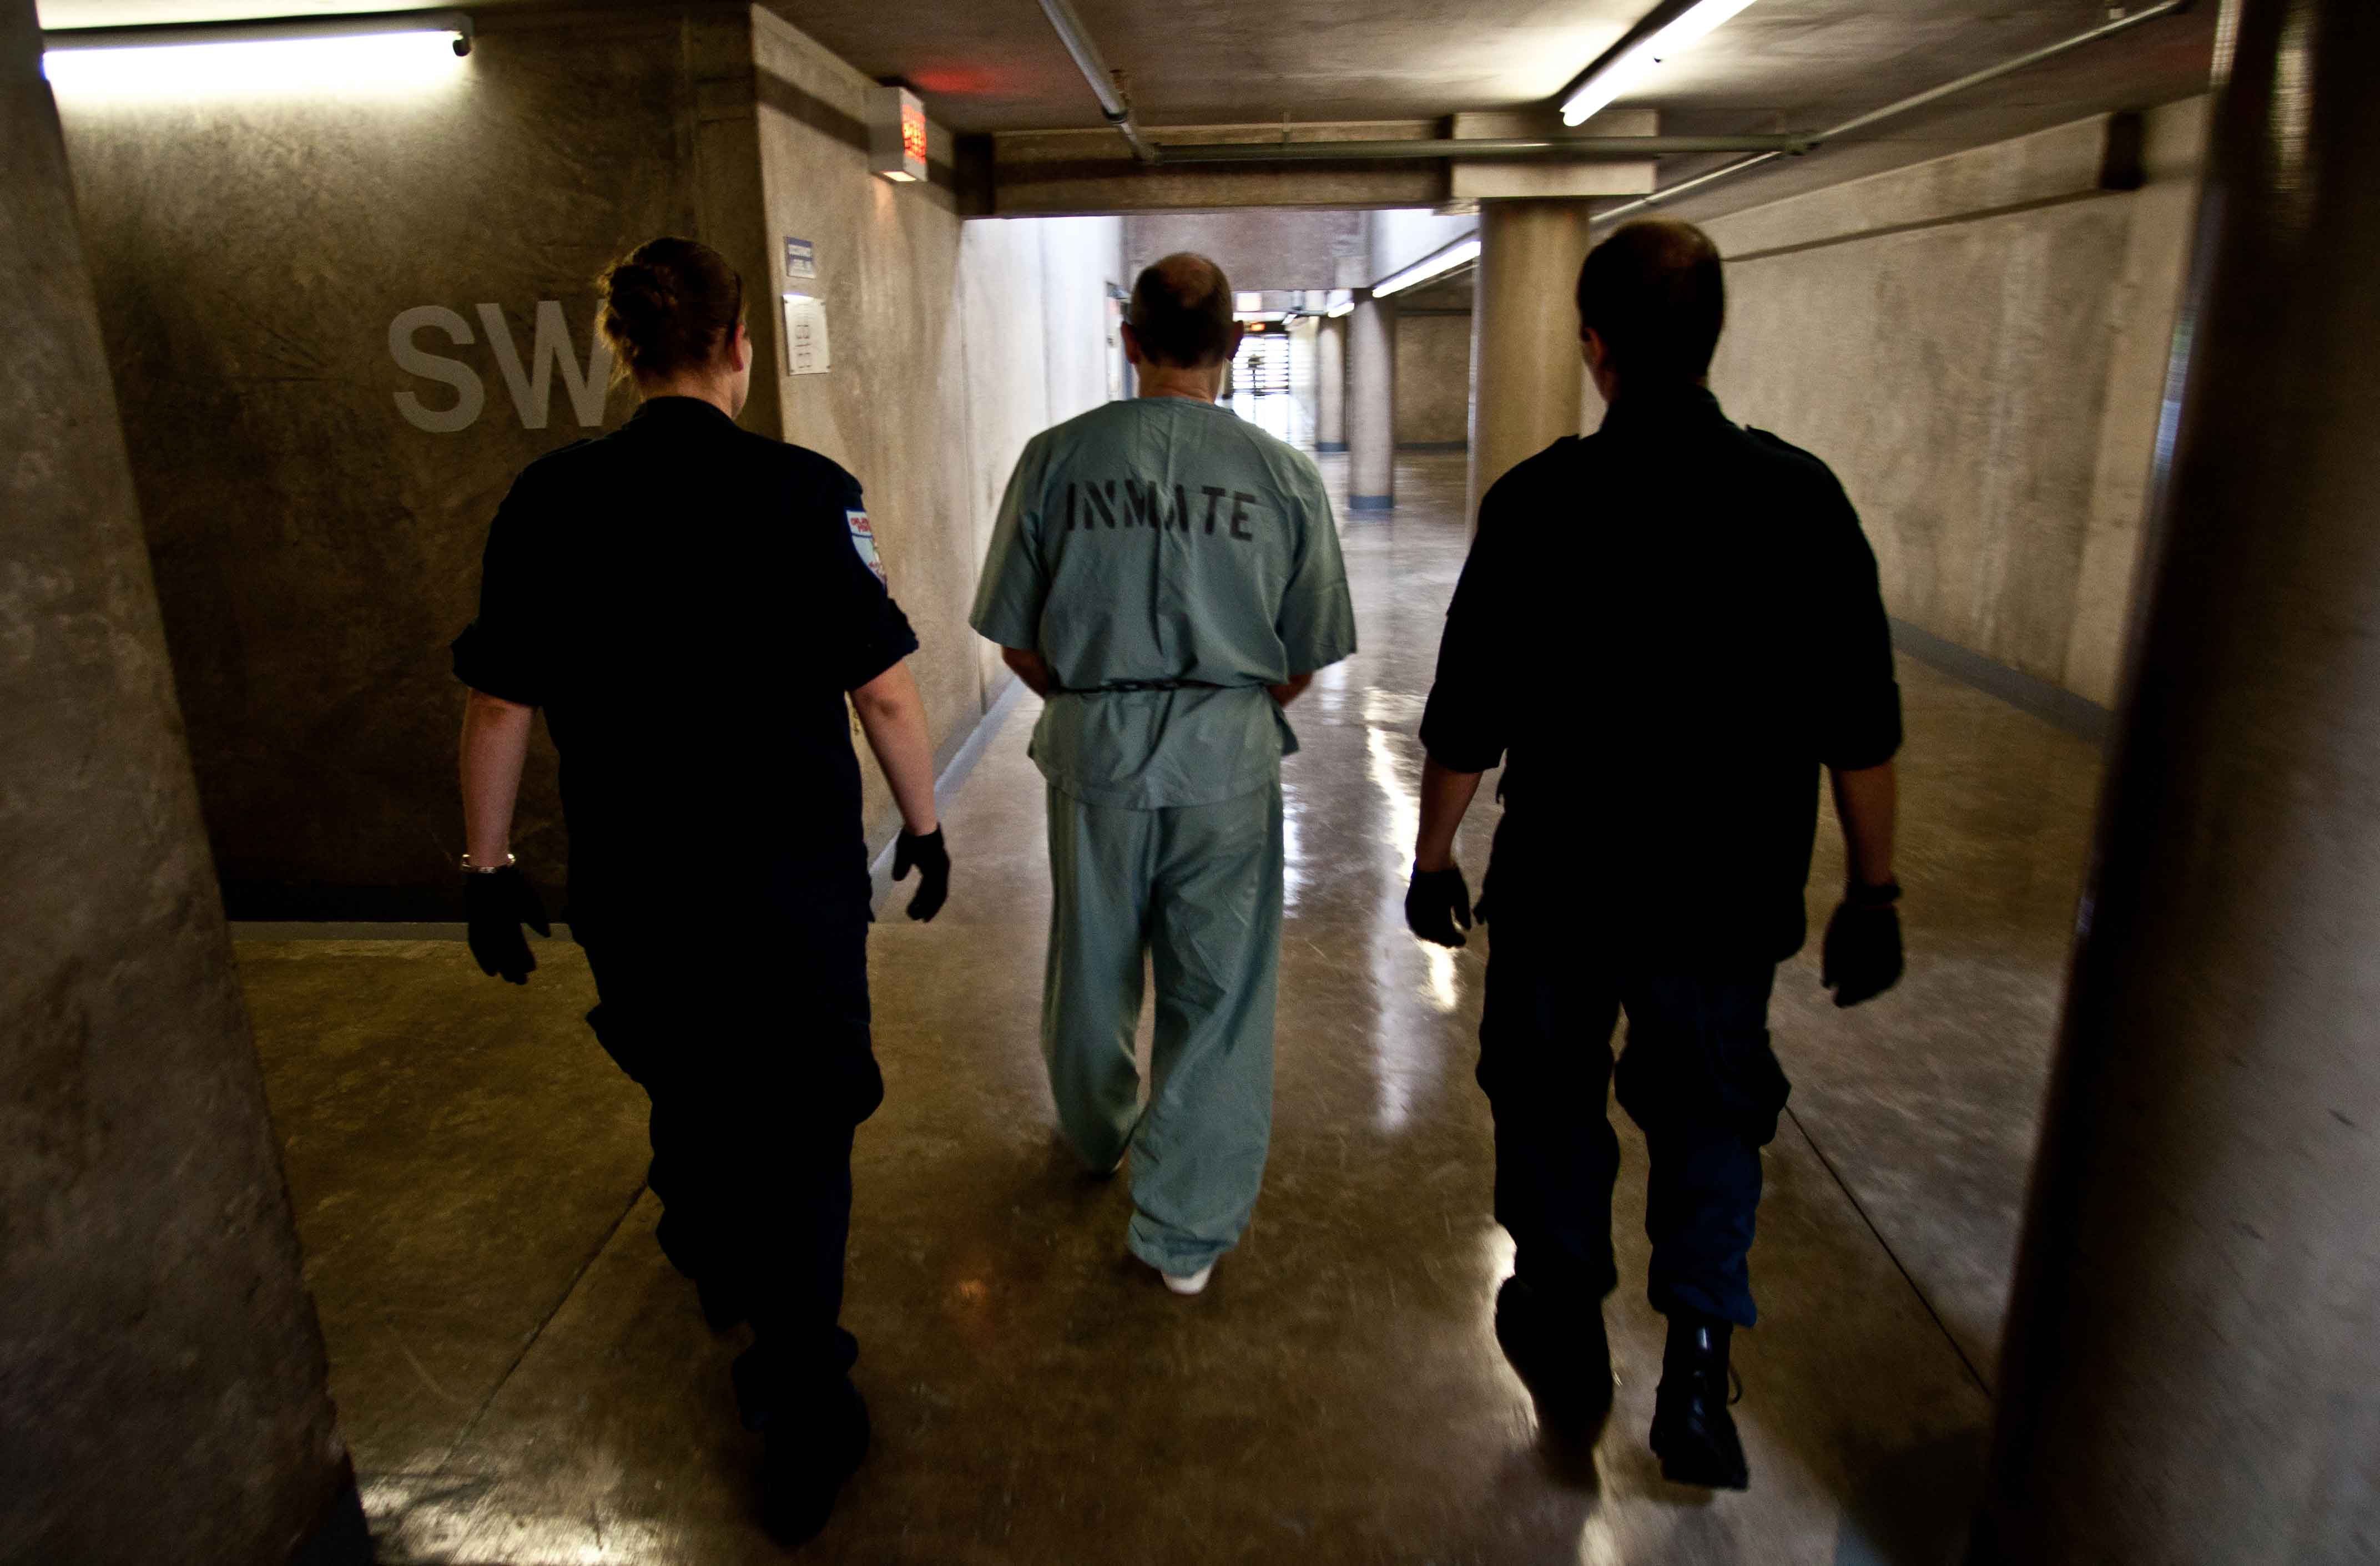 Dead Man Walking Michael Selsor Death Row Oklahoma